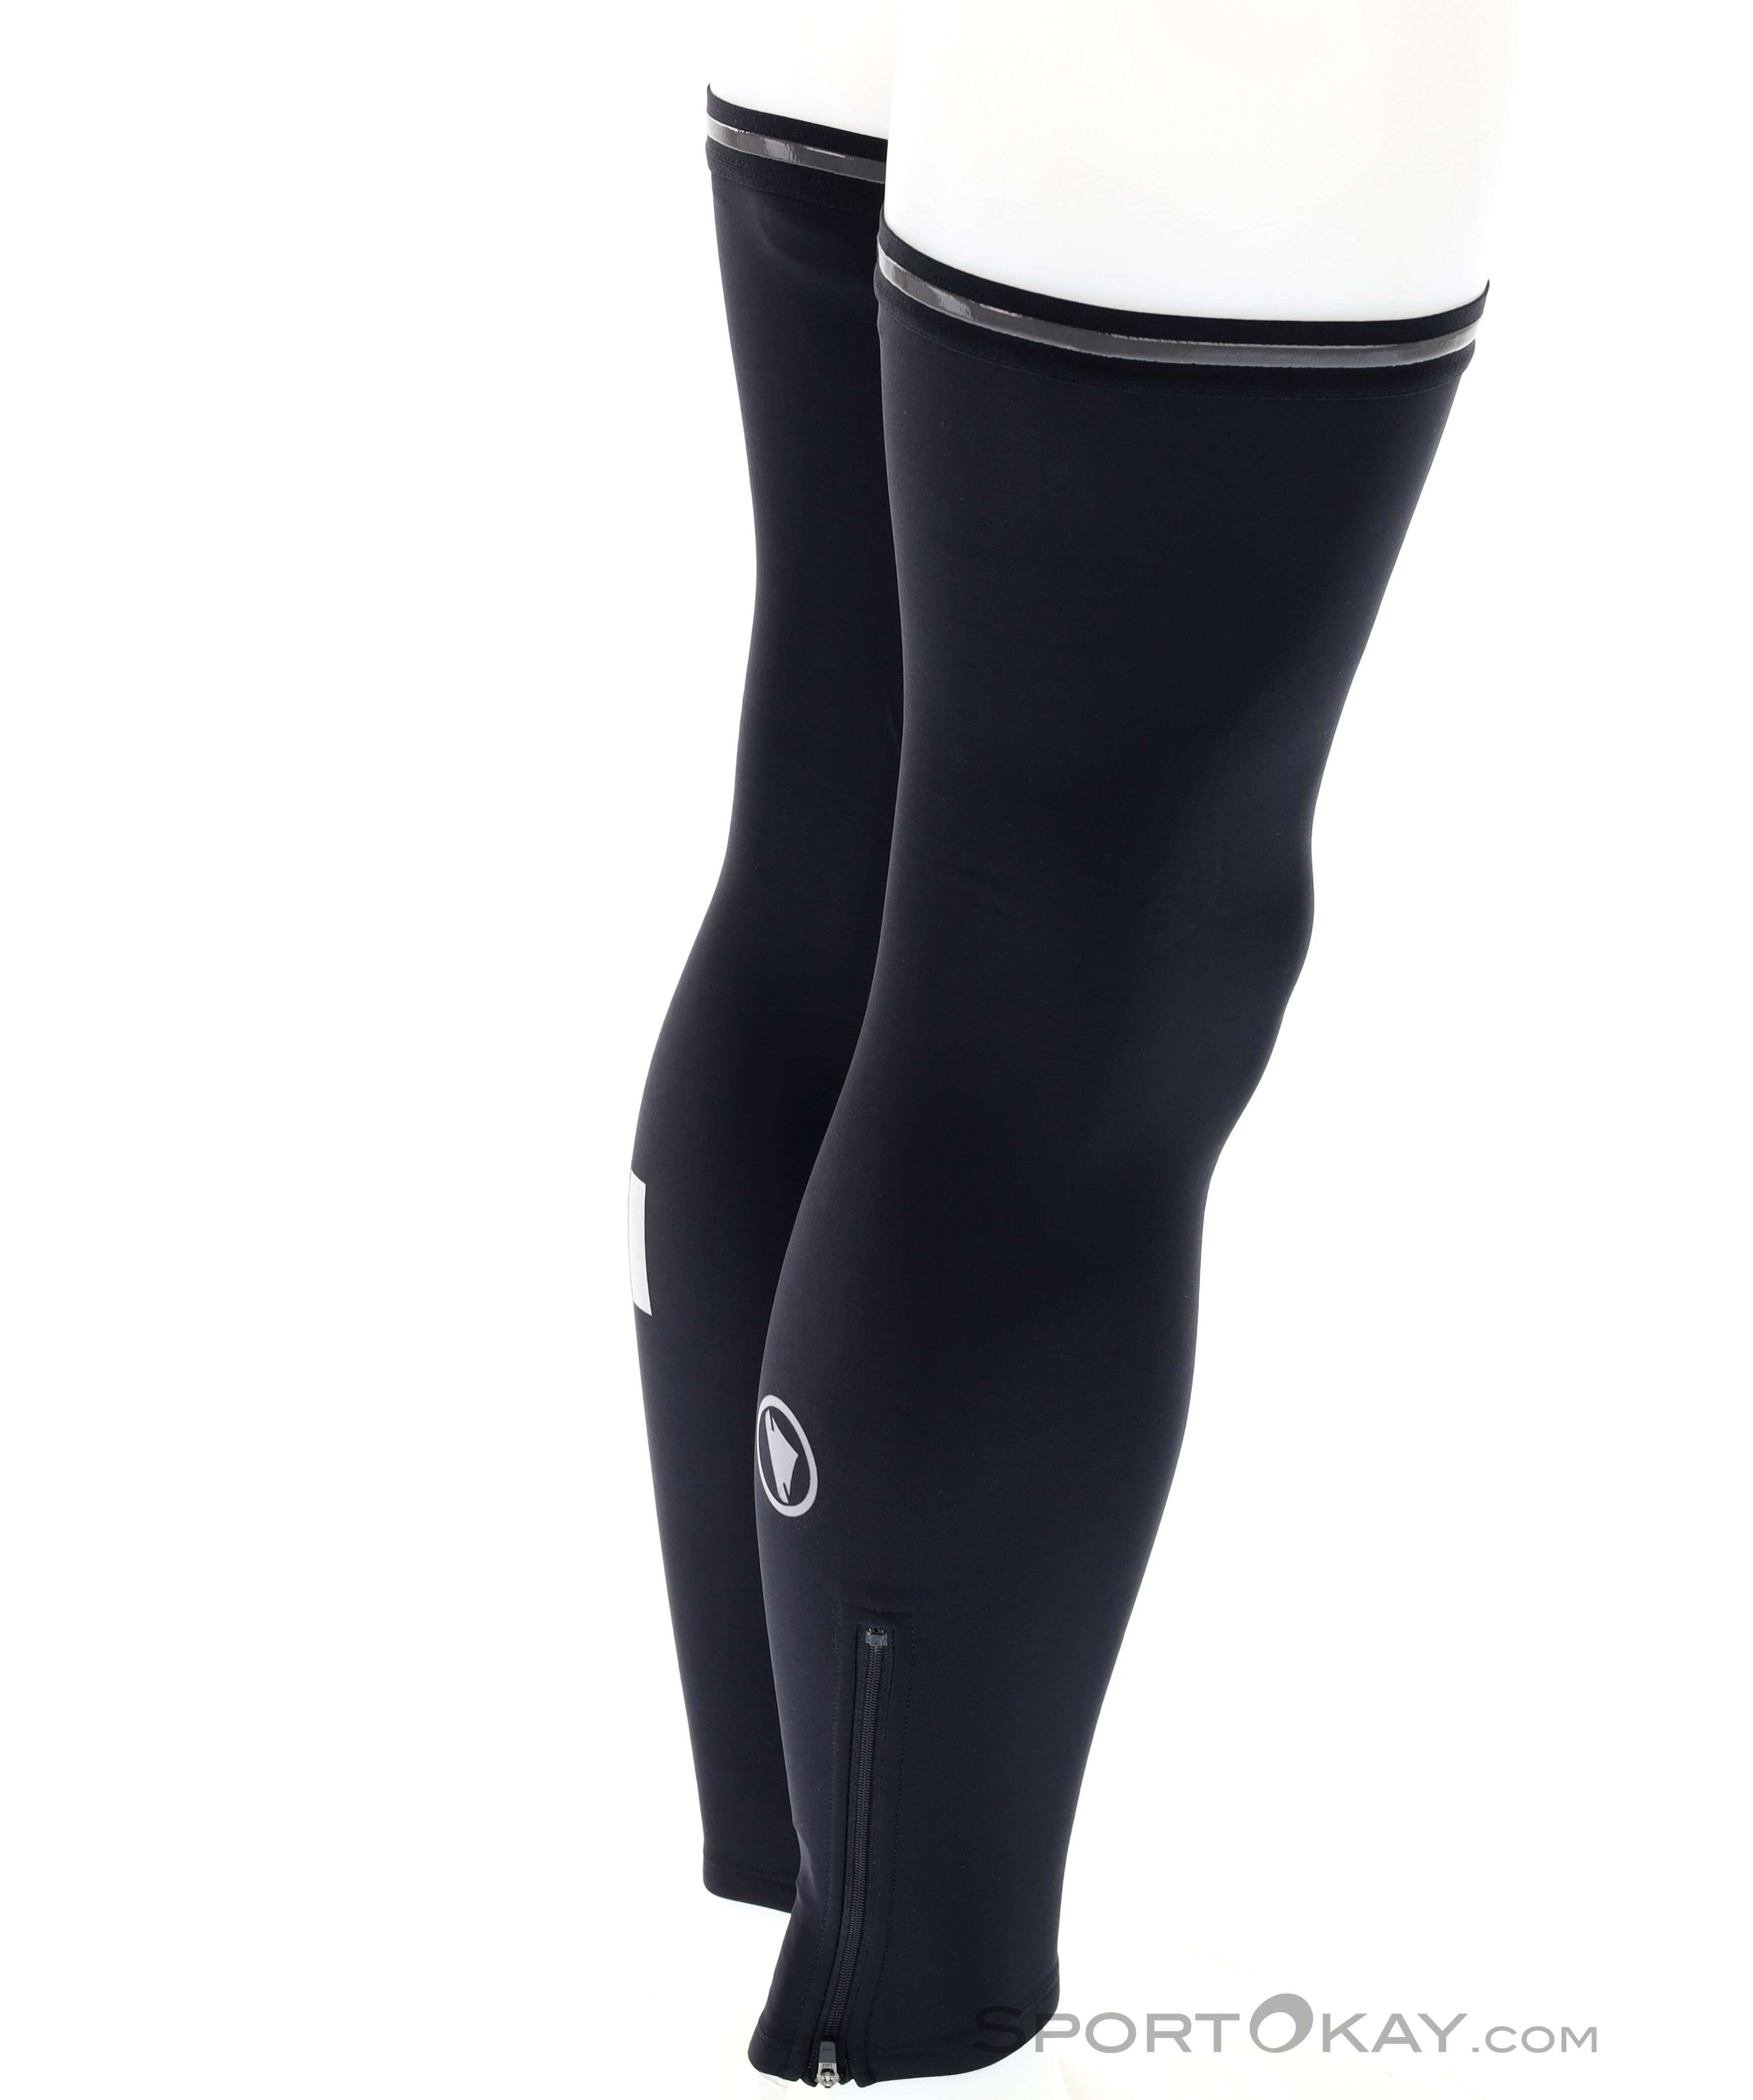 Review: Endura FS260-Pro Thermo Leg Warmer